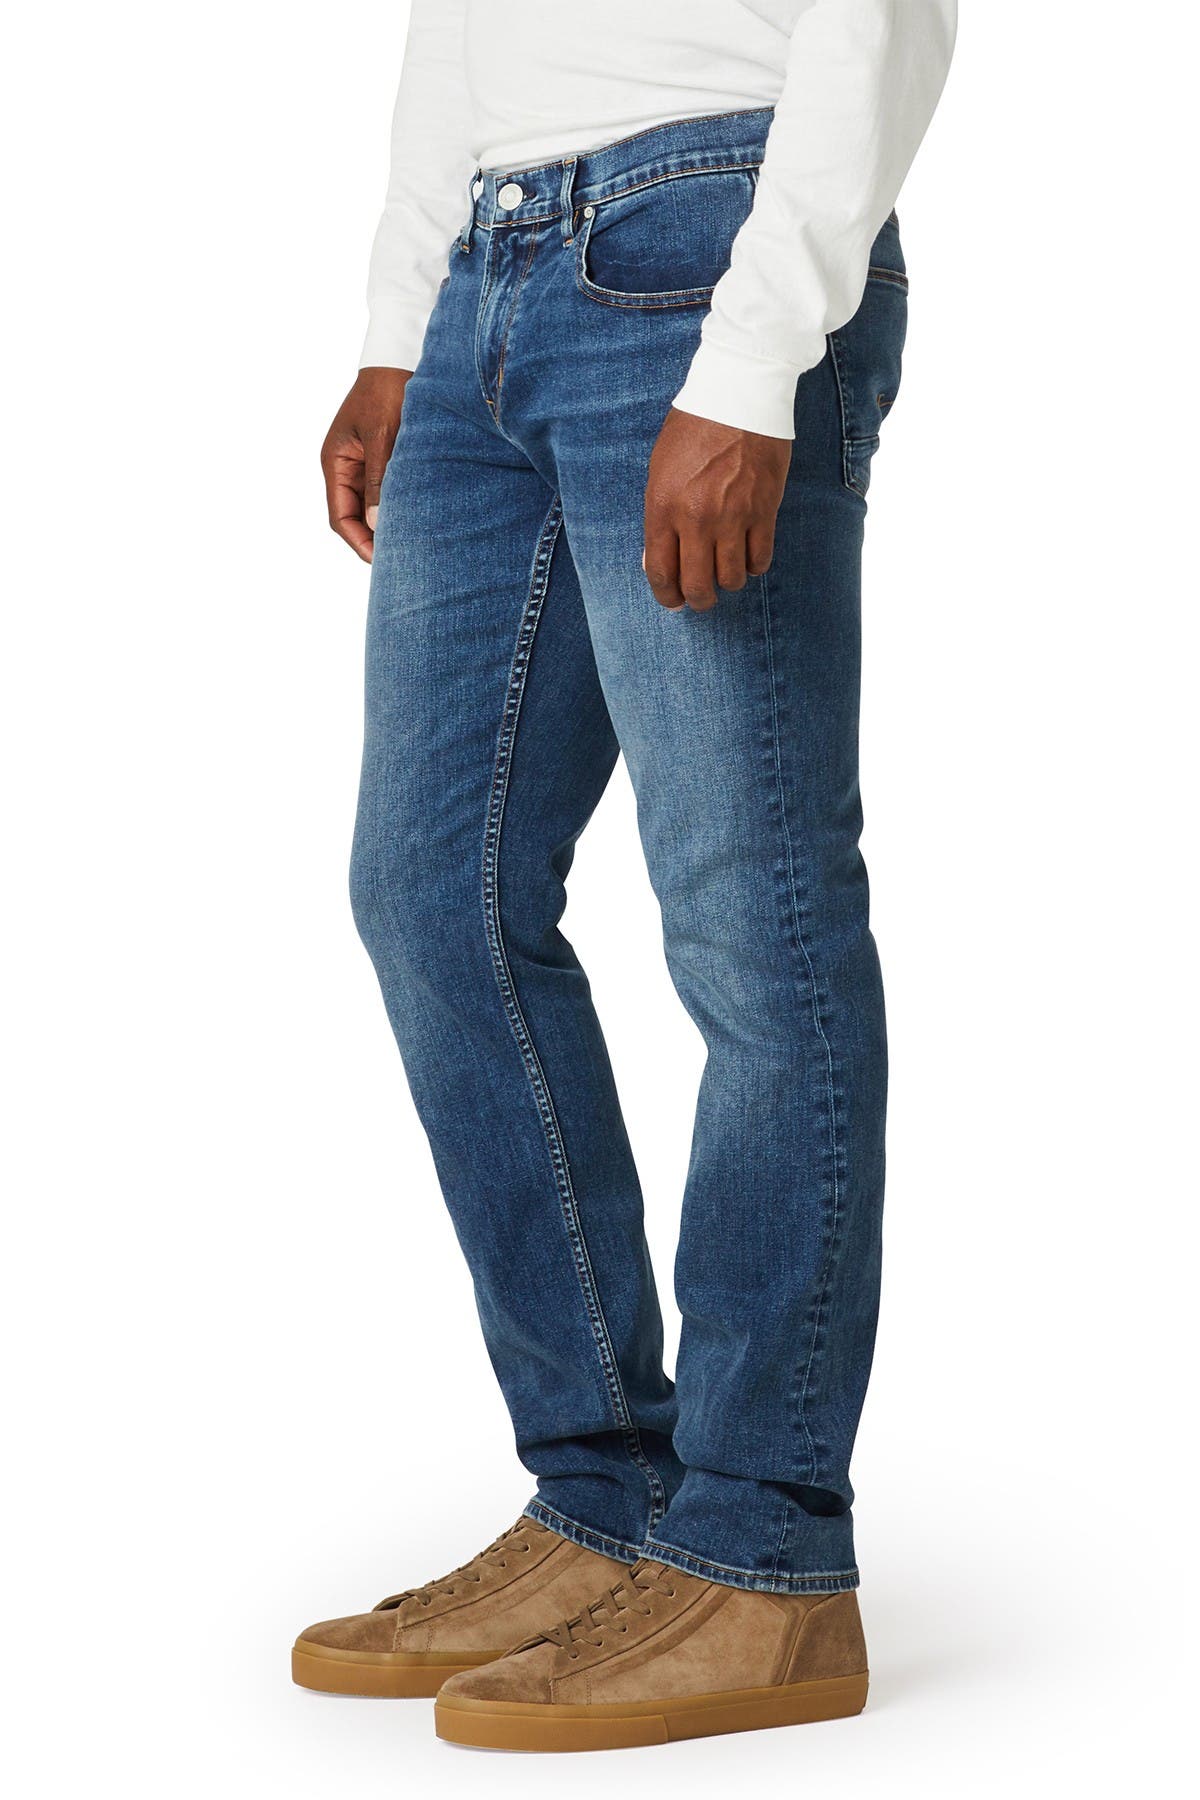 hudson jeans byron straight leg jeans